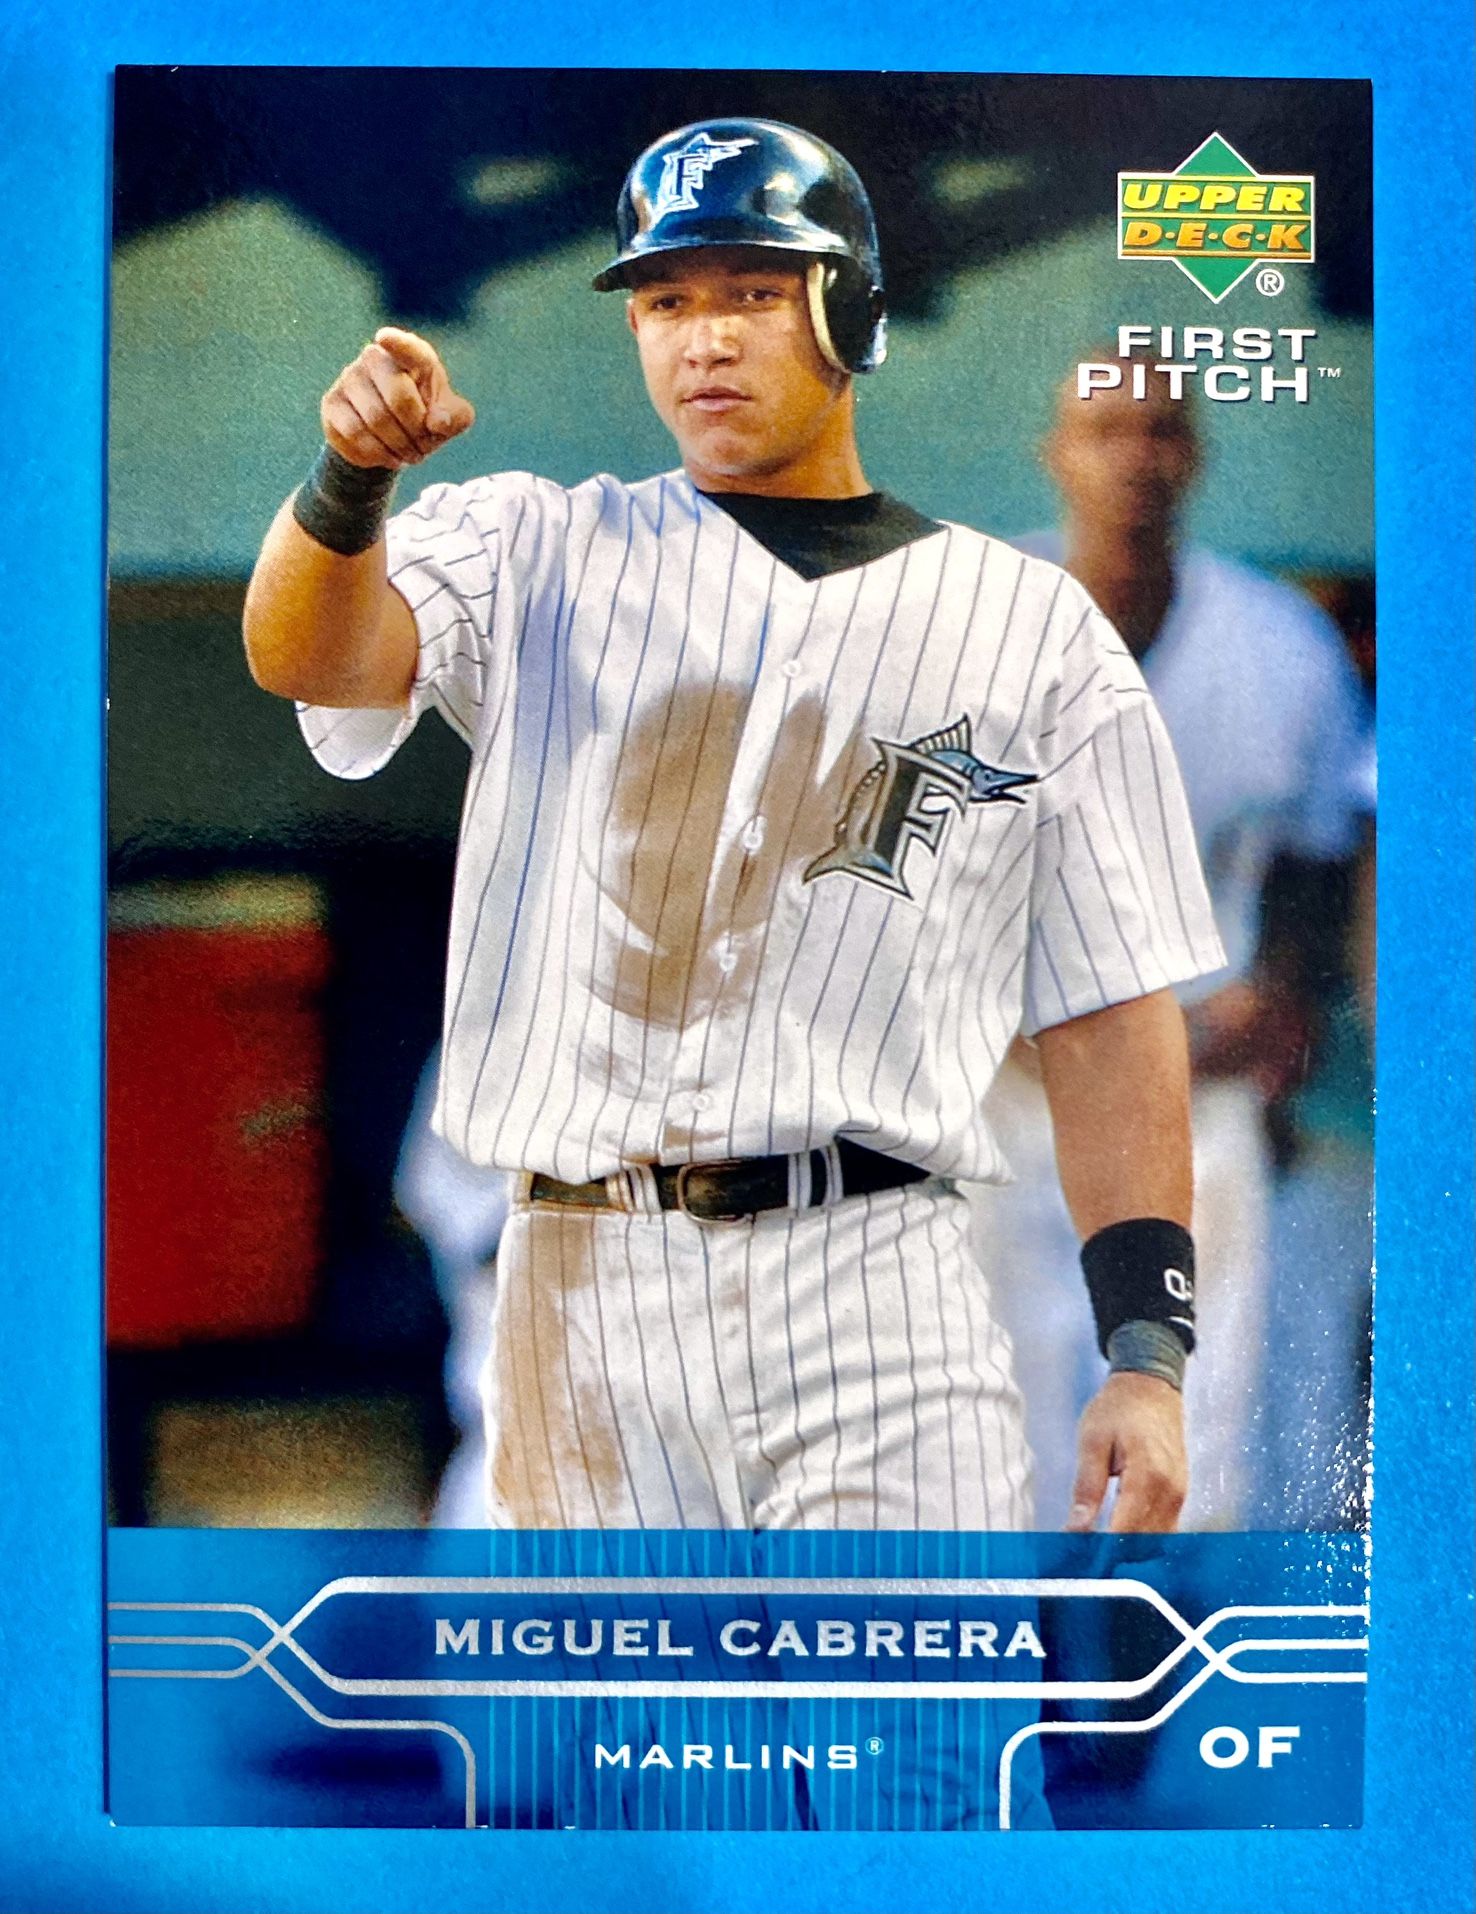 Miguel Cabrera 2005 Upper Deck “First Pitch” Card